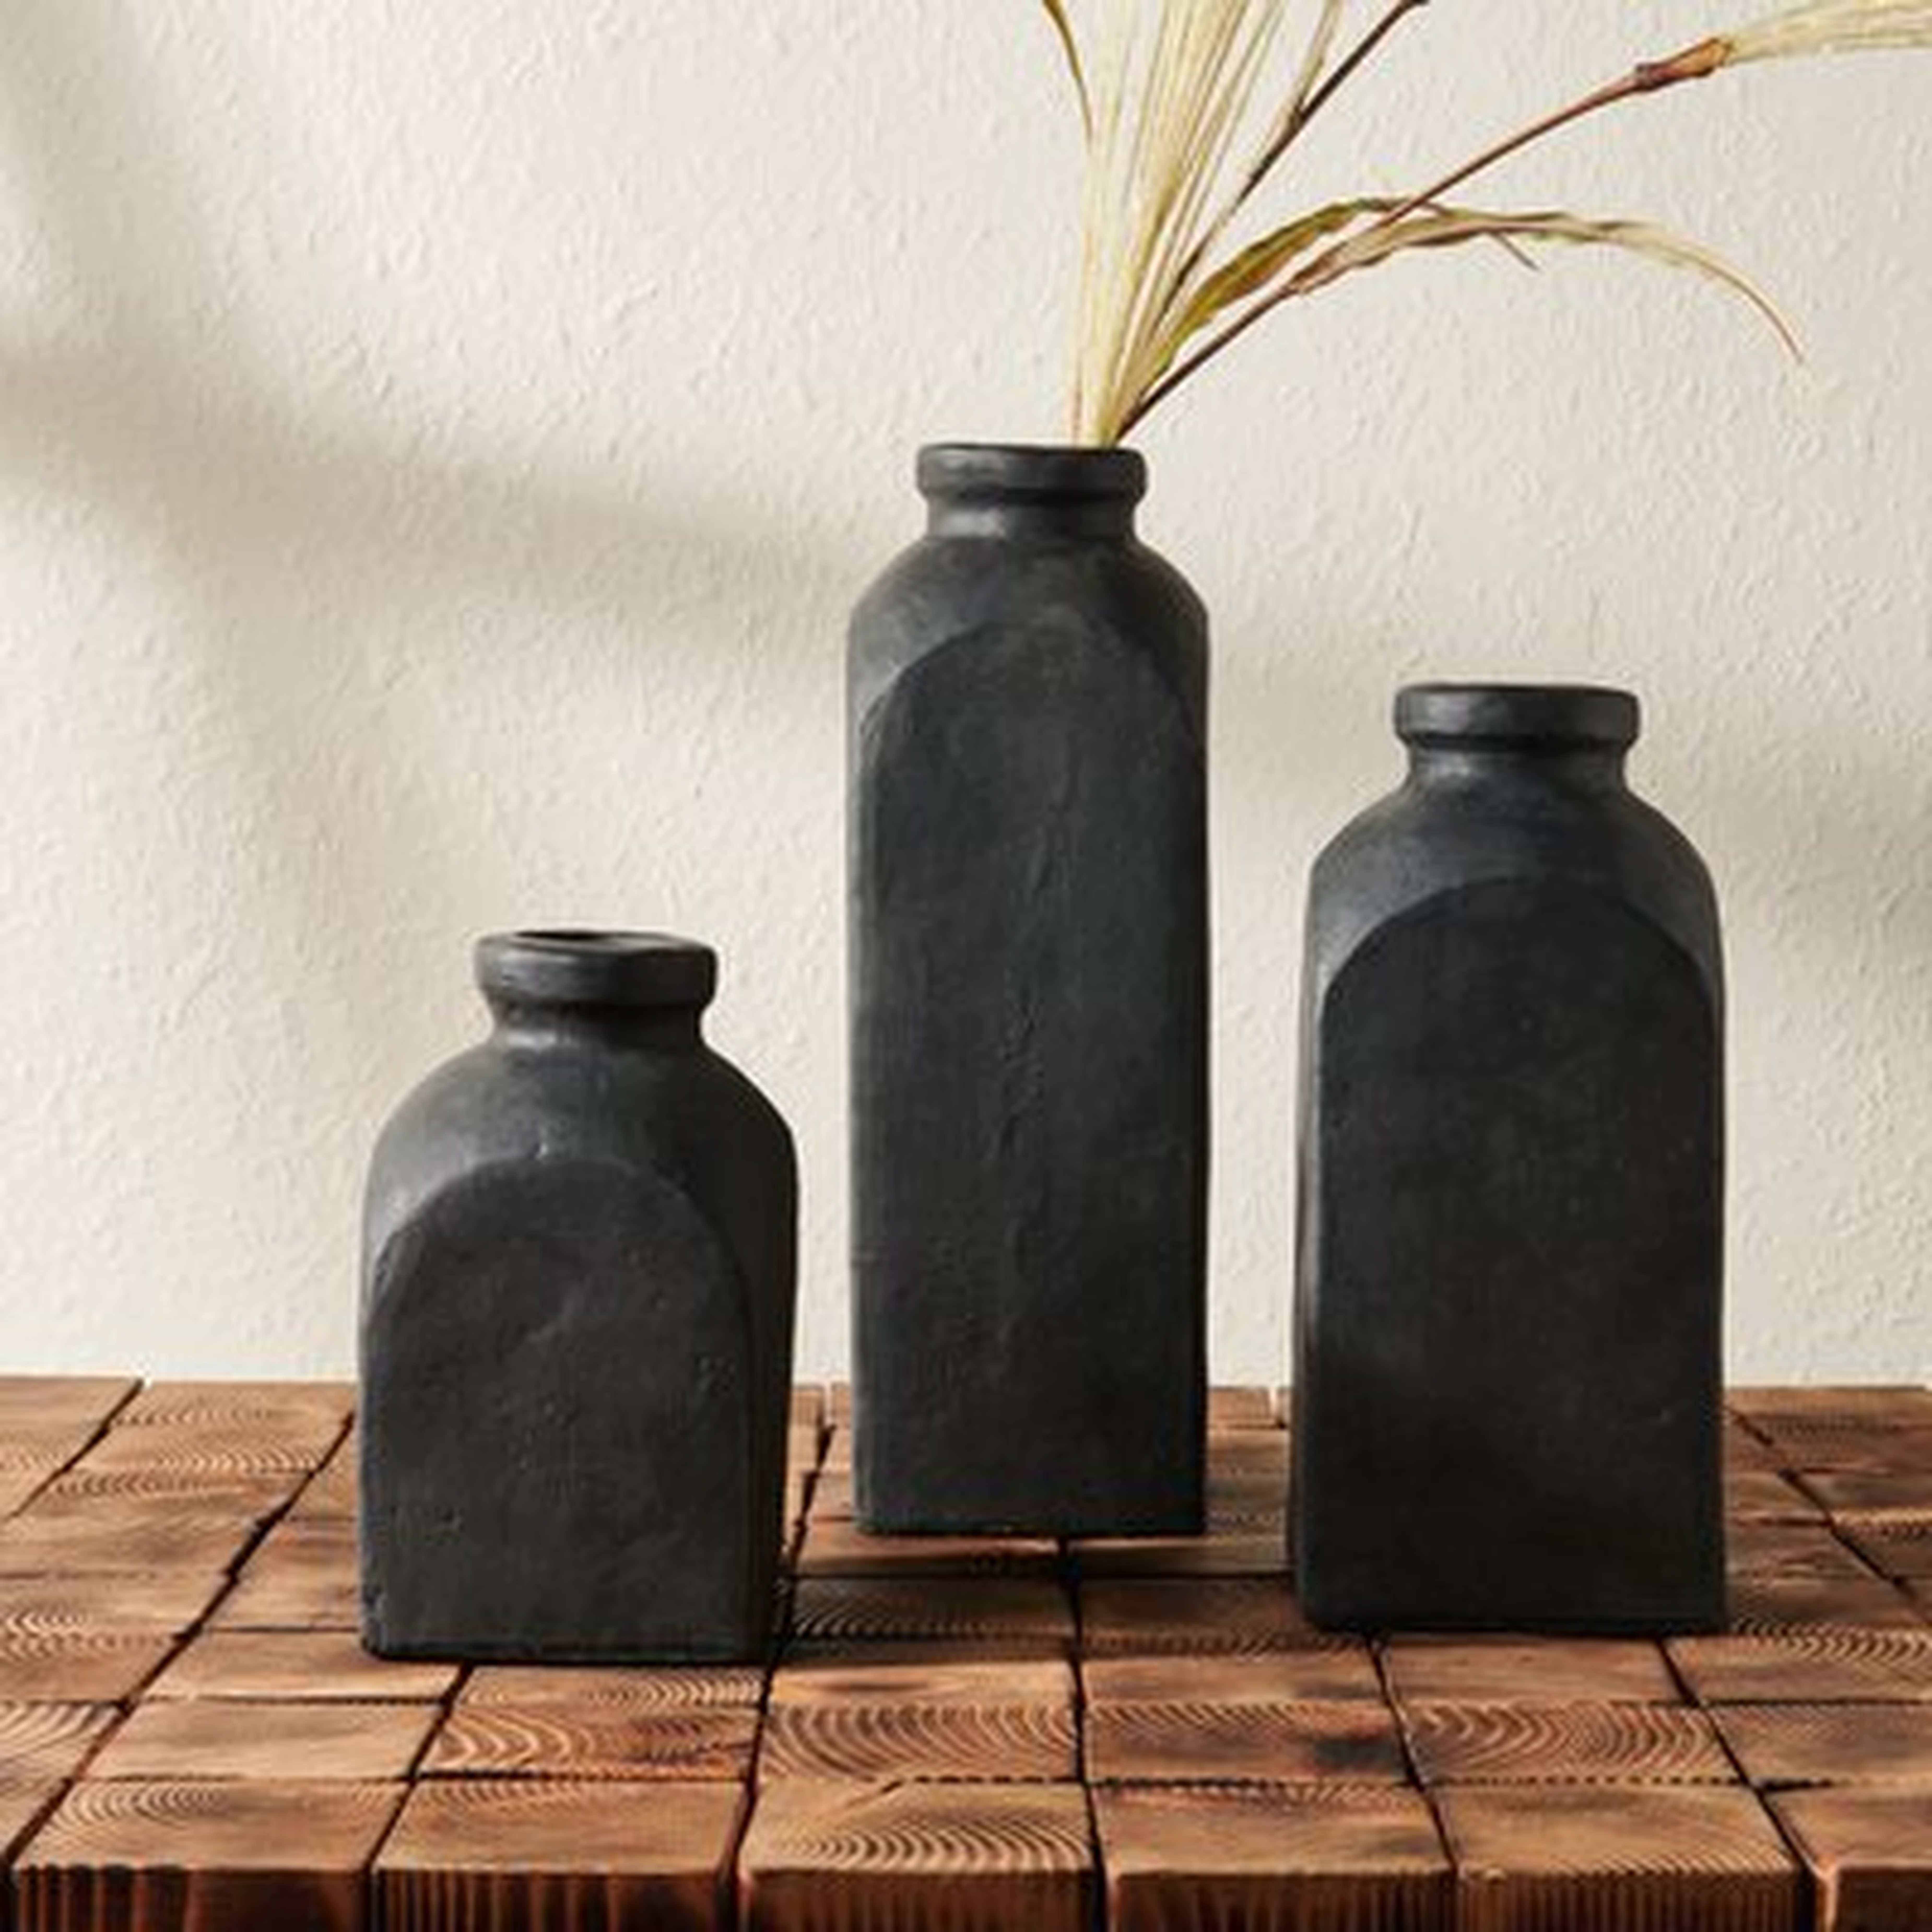 3 Piece Black Teracotta Vase Set With Matte Finish - Wayfair